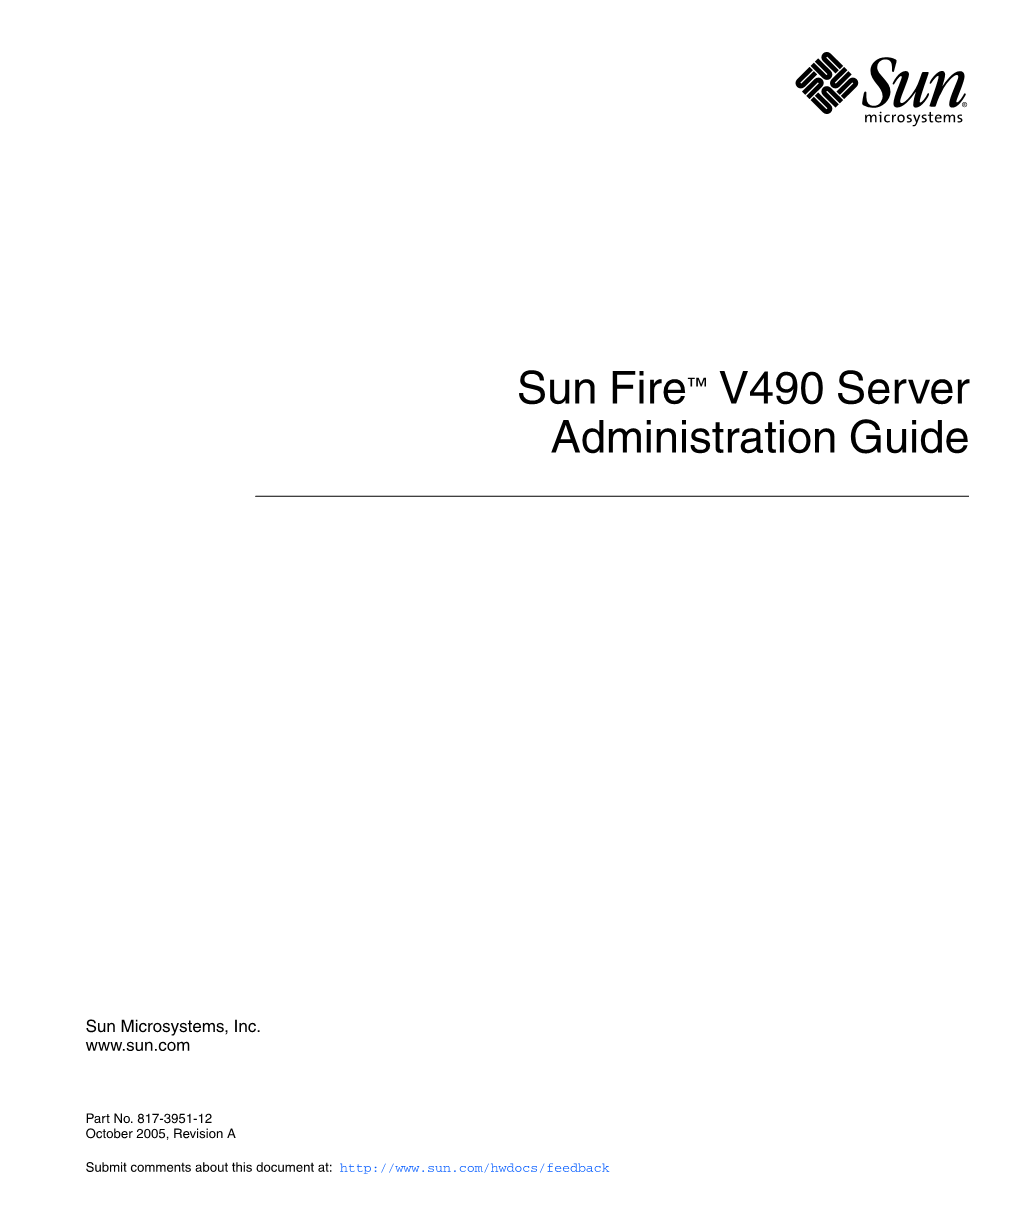 Sun Fire V490 Server Administration Guide